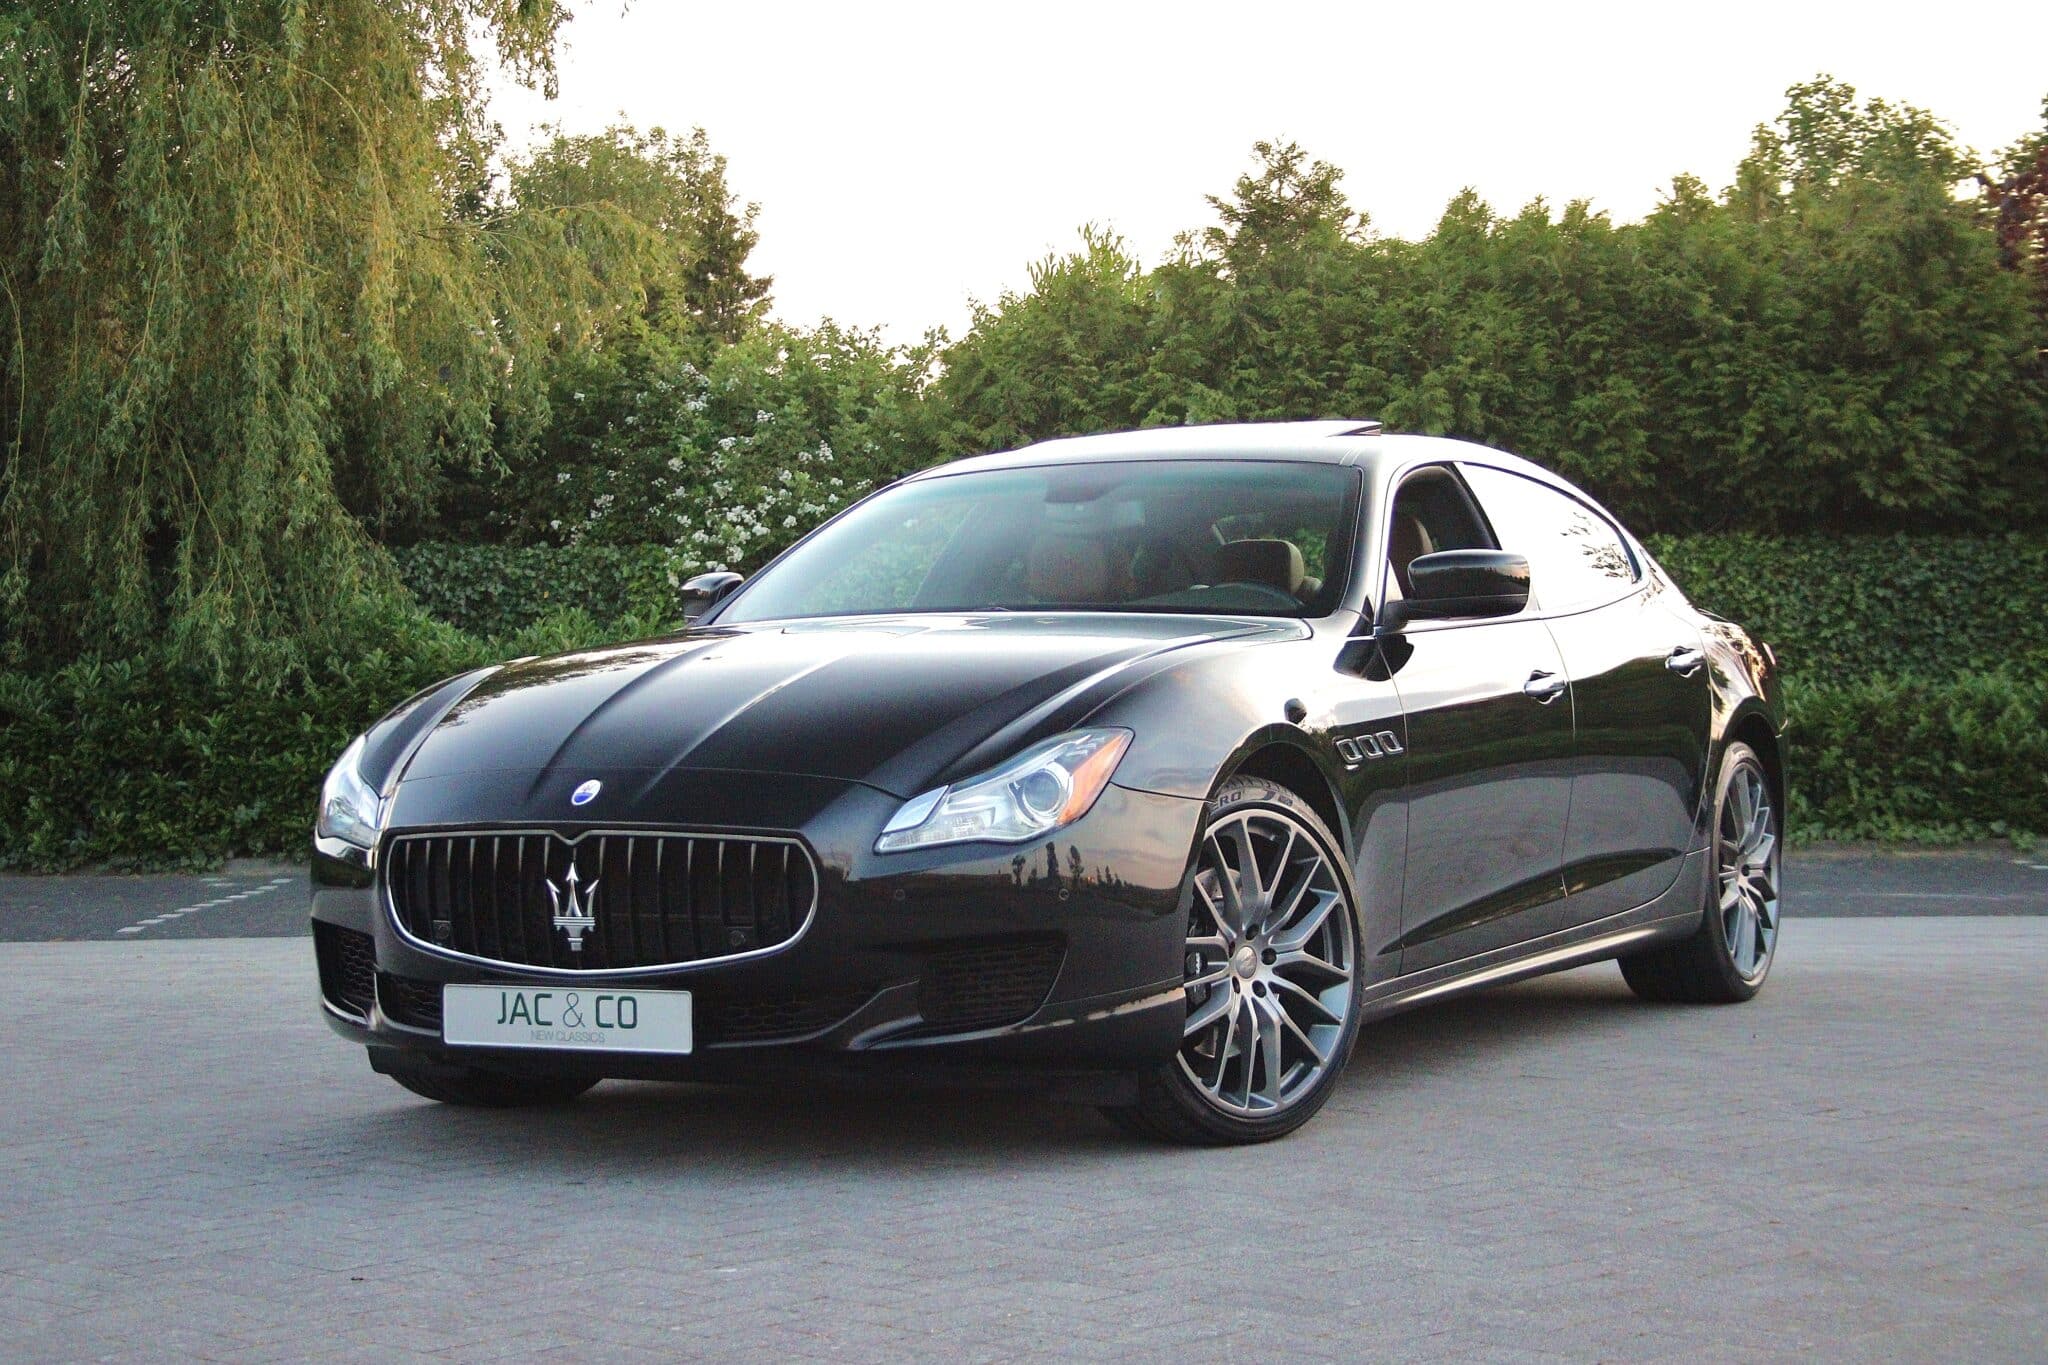 https://jacco.nl/wp-content/uploads/2023/06/Maserati-Quattroporte-3.0S-Q4-JacCo-1-scaled.jpg